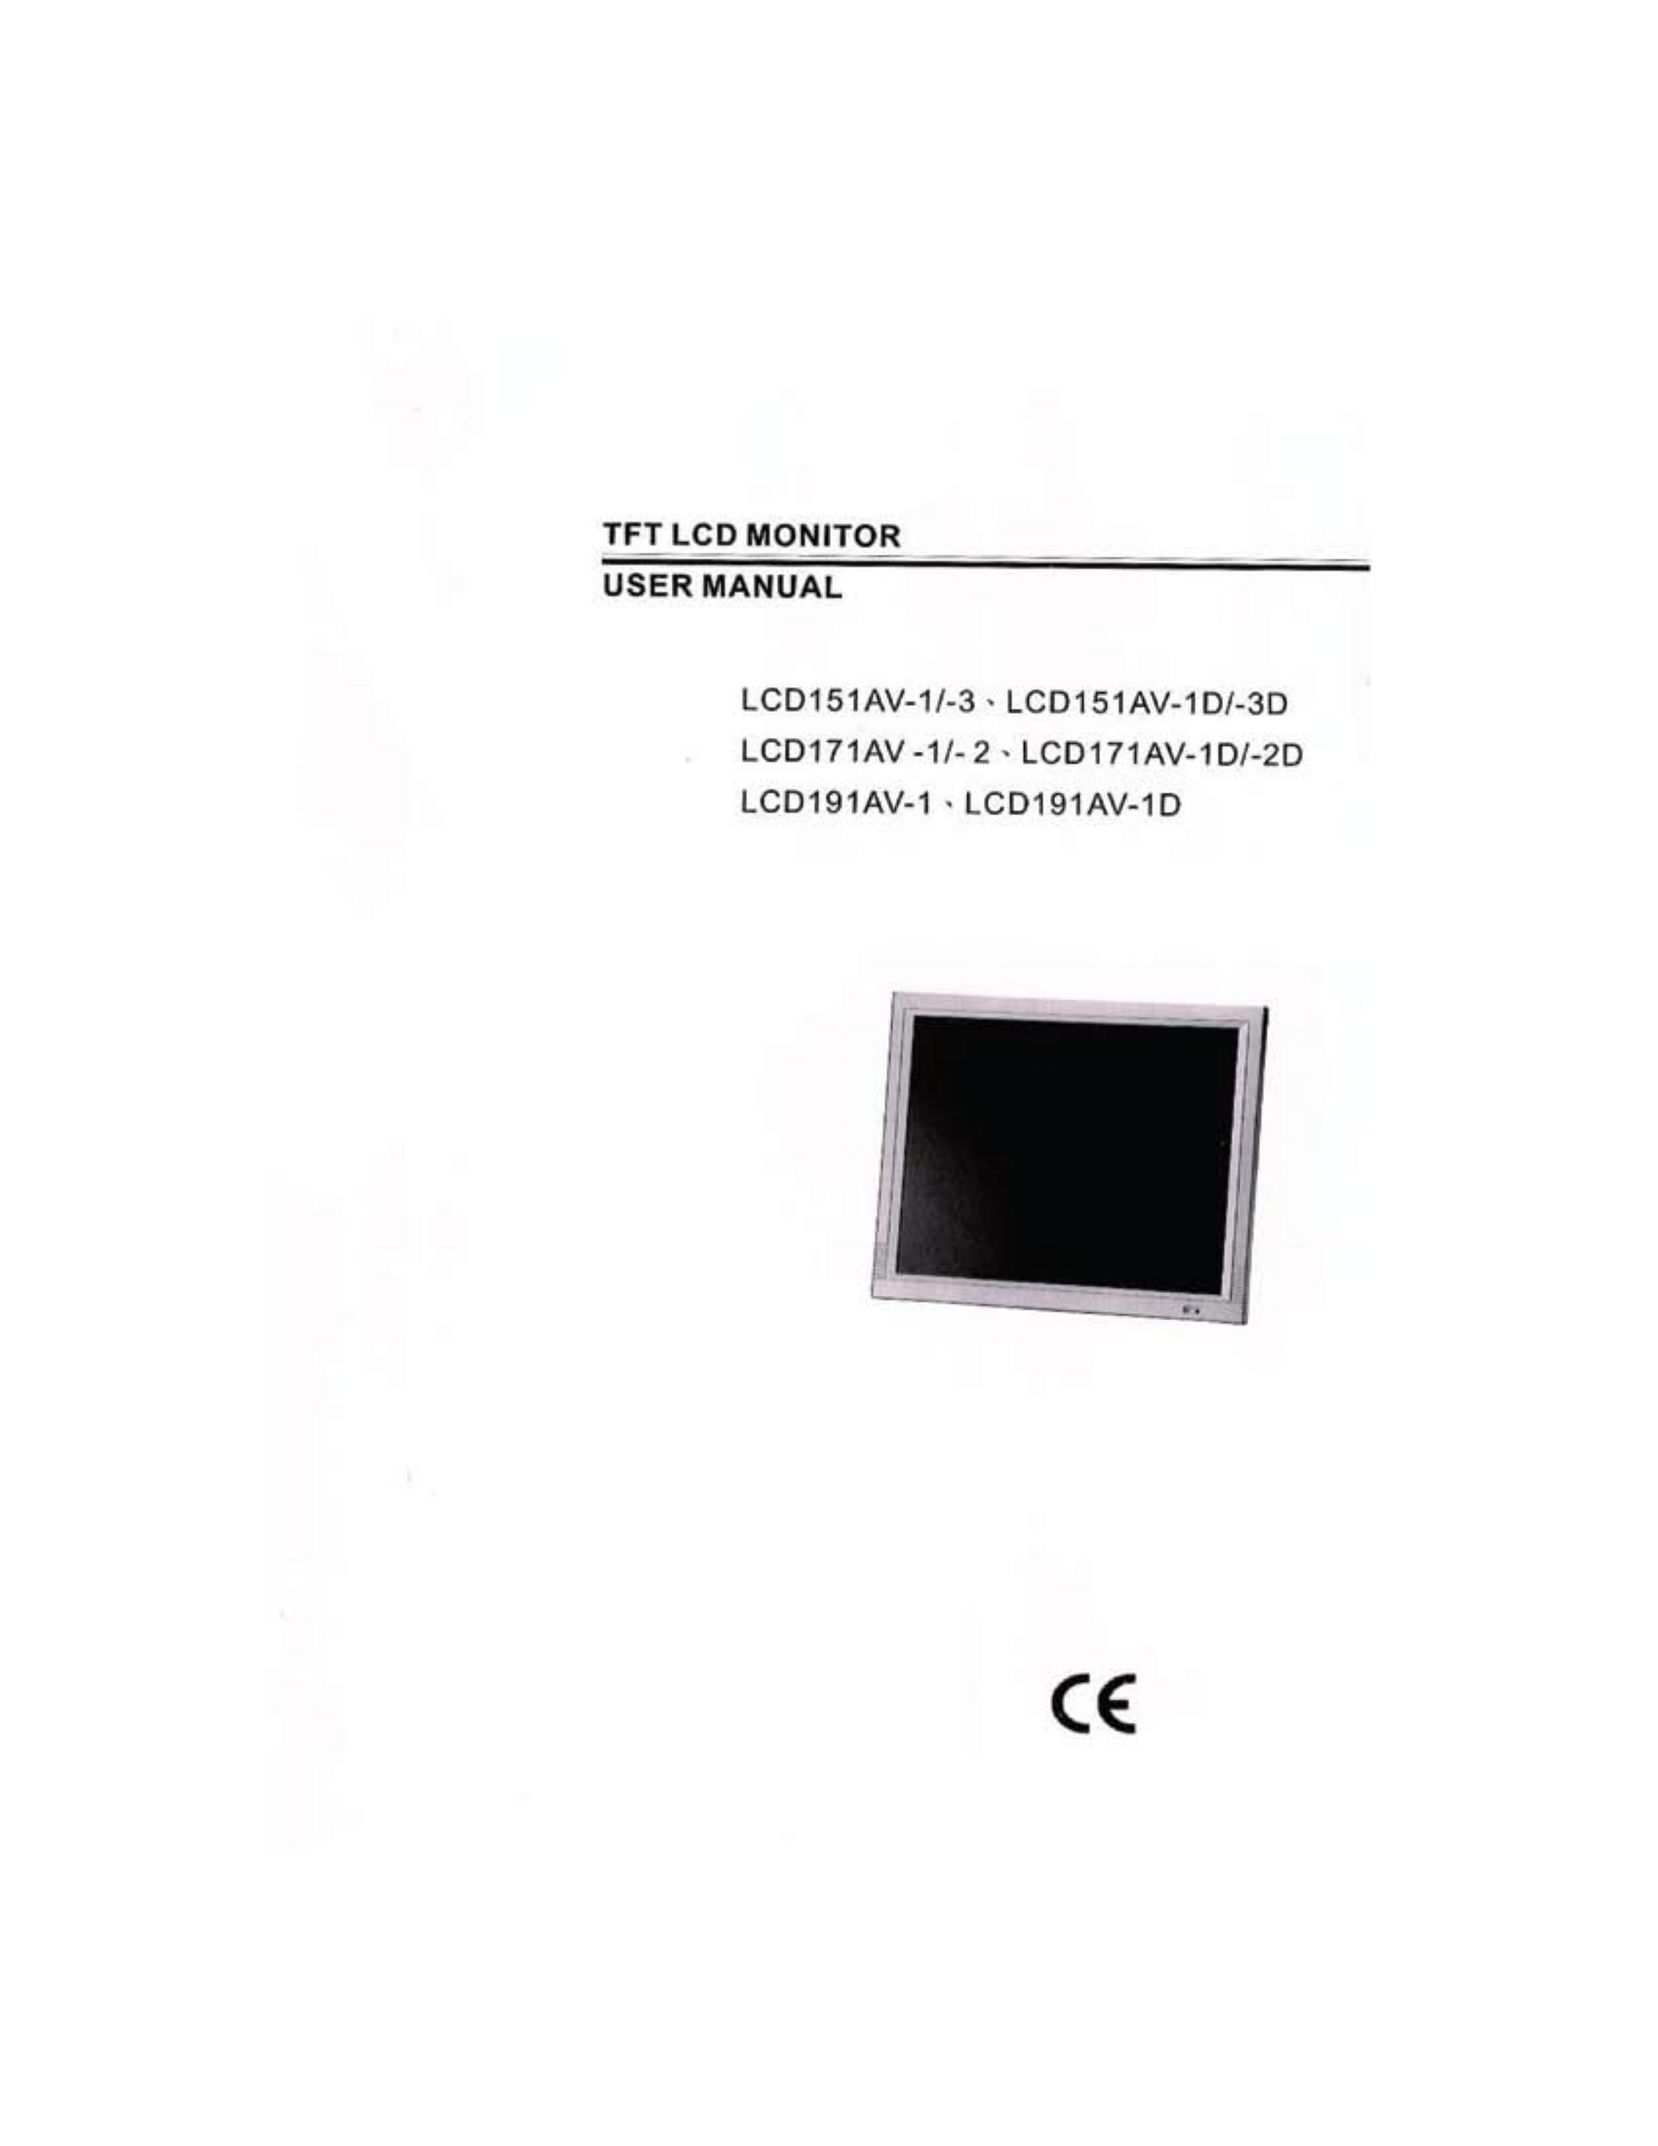 AVE LCD151AV-1/-3 Computer Monitor User Manual